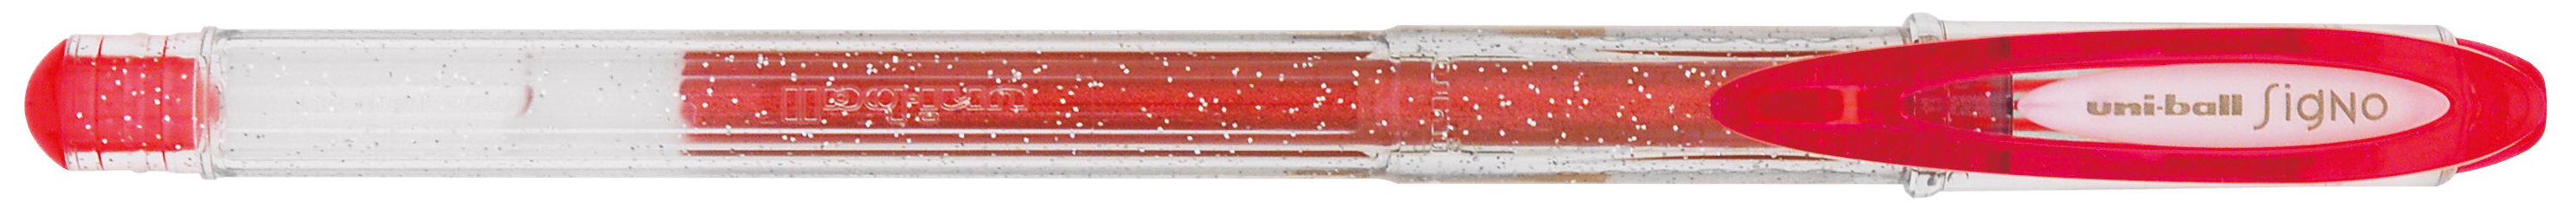 UNI-BALL Signo Sparkling 1mm UM-120SP RED rouge